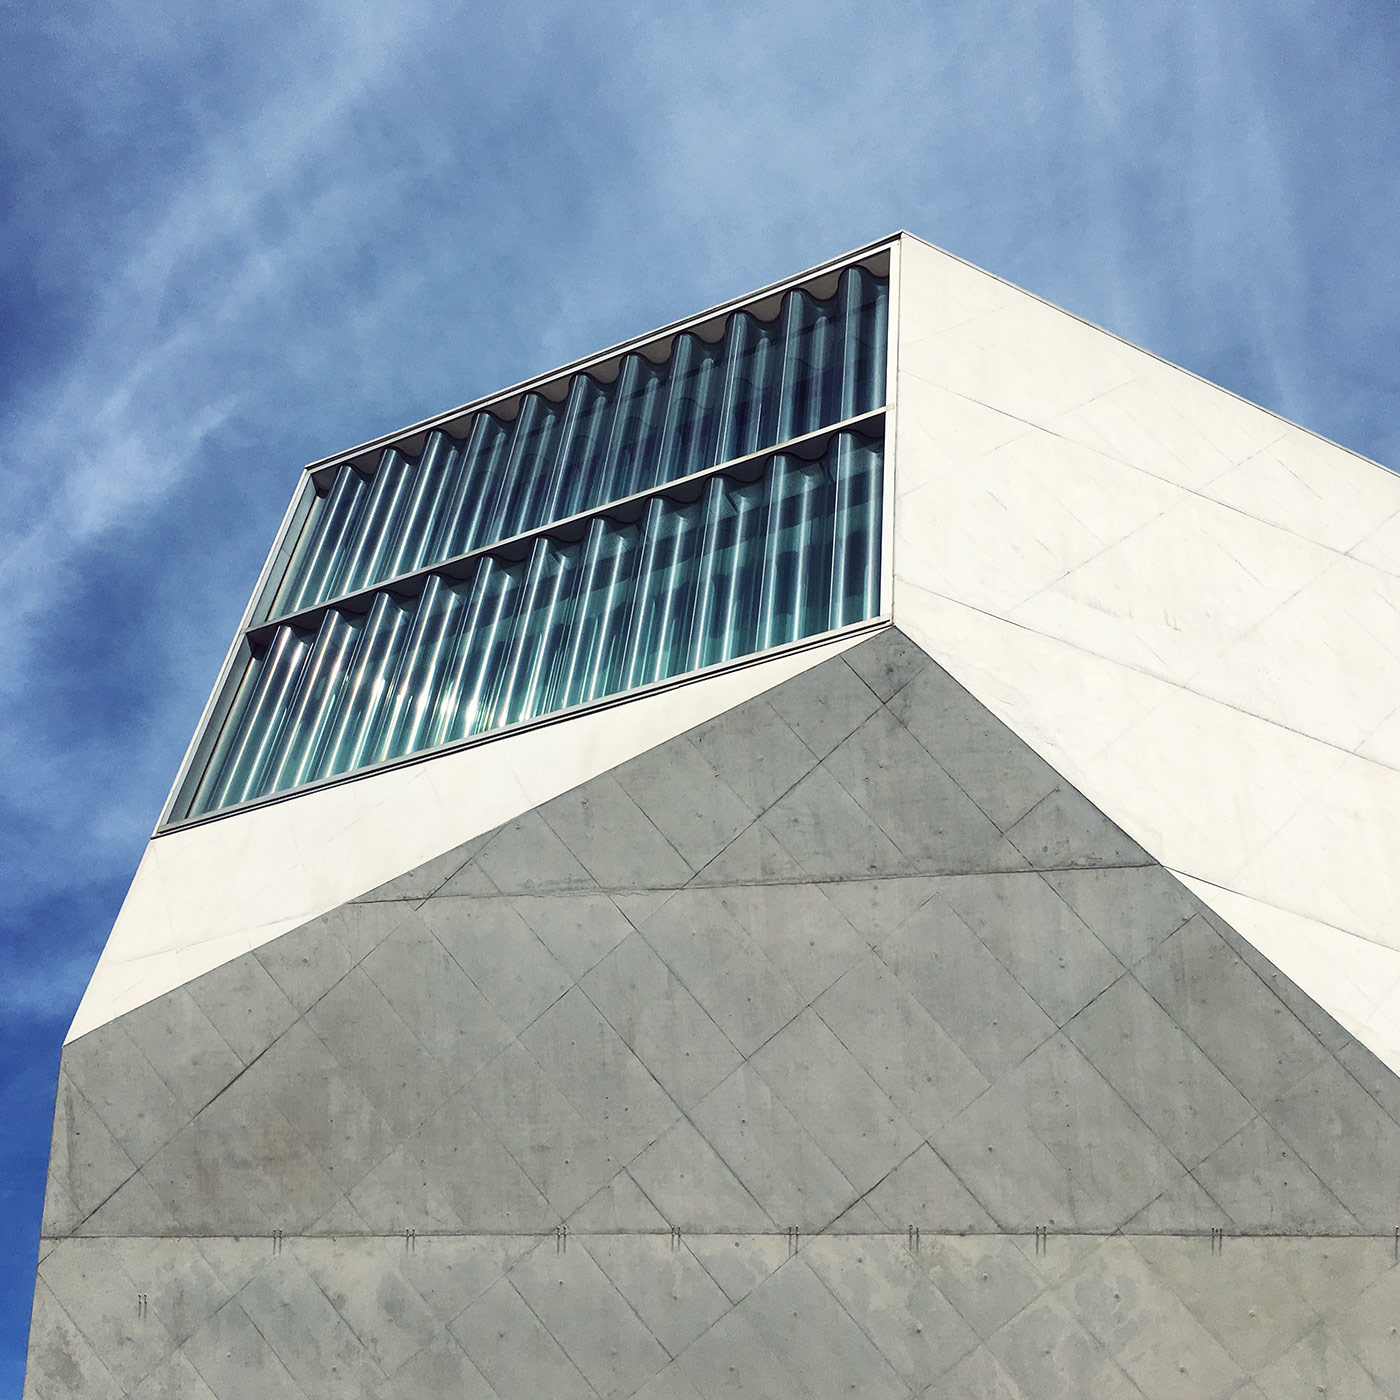 Casa da Música <br />Location: Porto, Portugal <br />Architects: OMA (Rem Koolhaas & Ellen Van Loon)